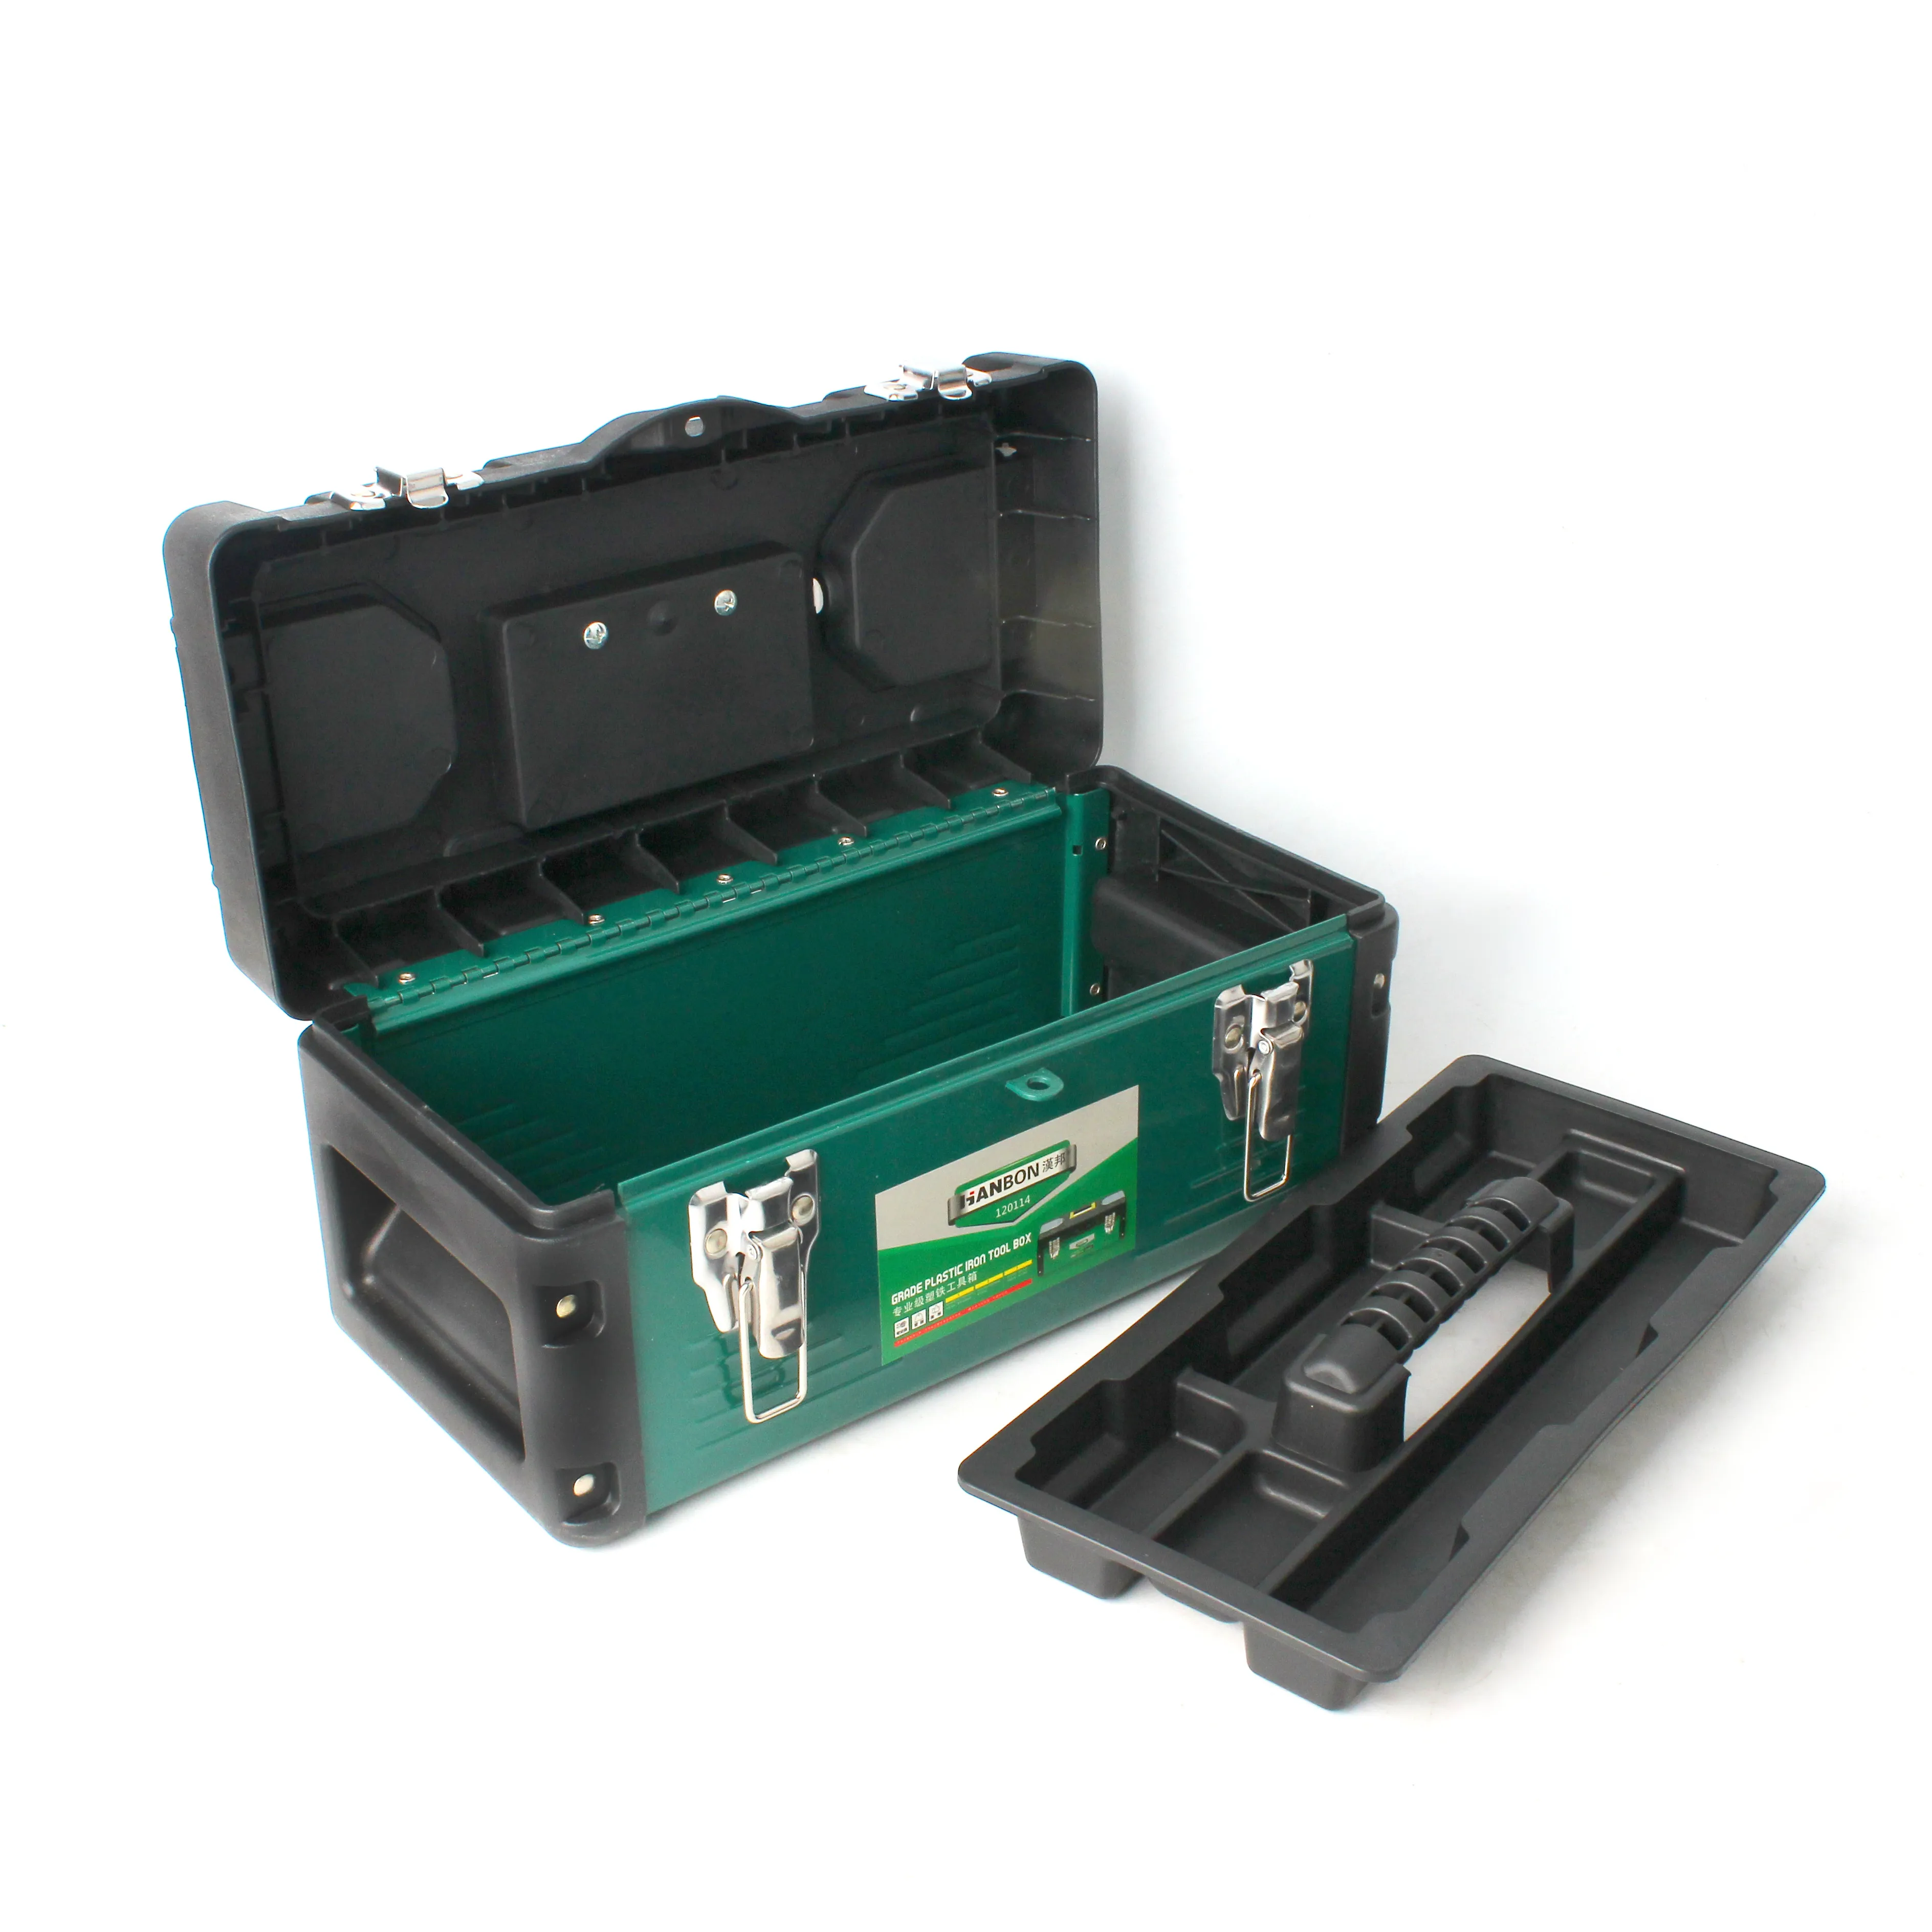 Advantages of plastic tool boxes